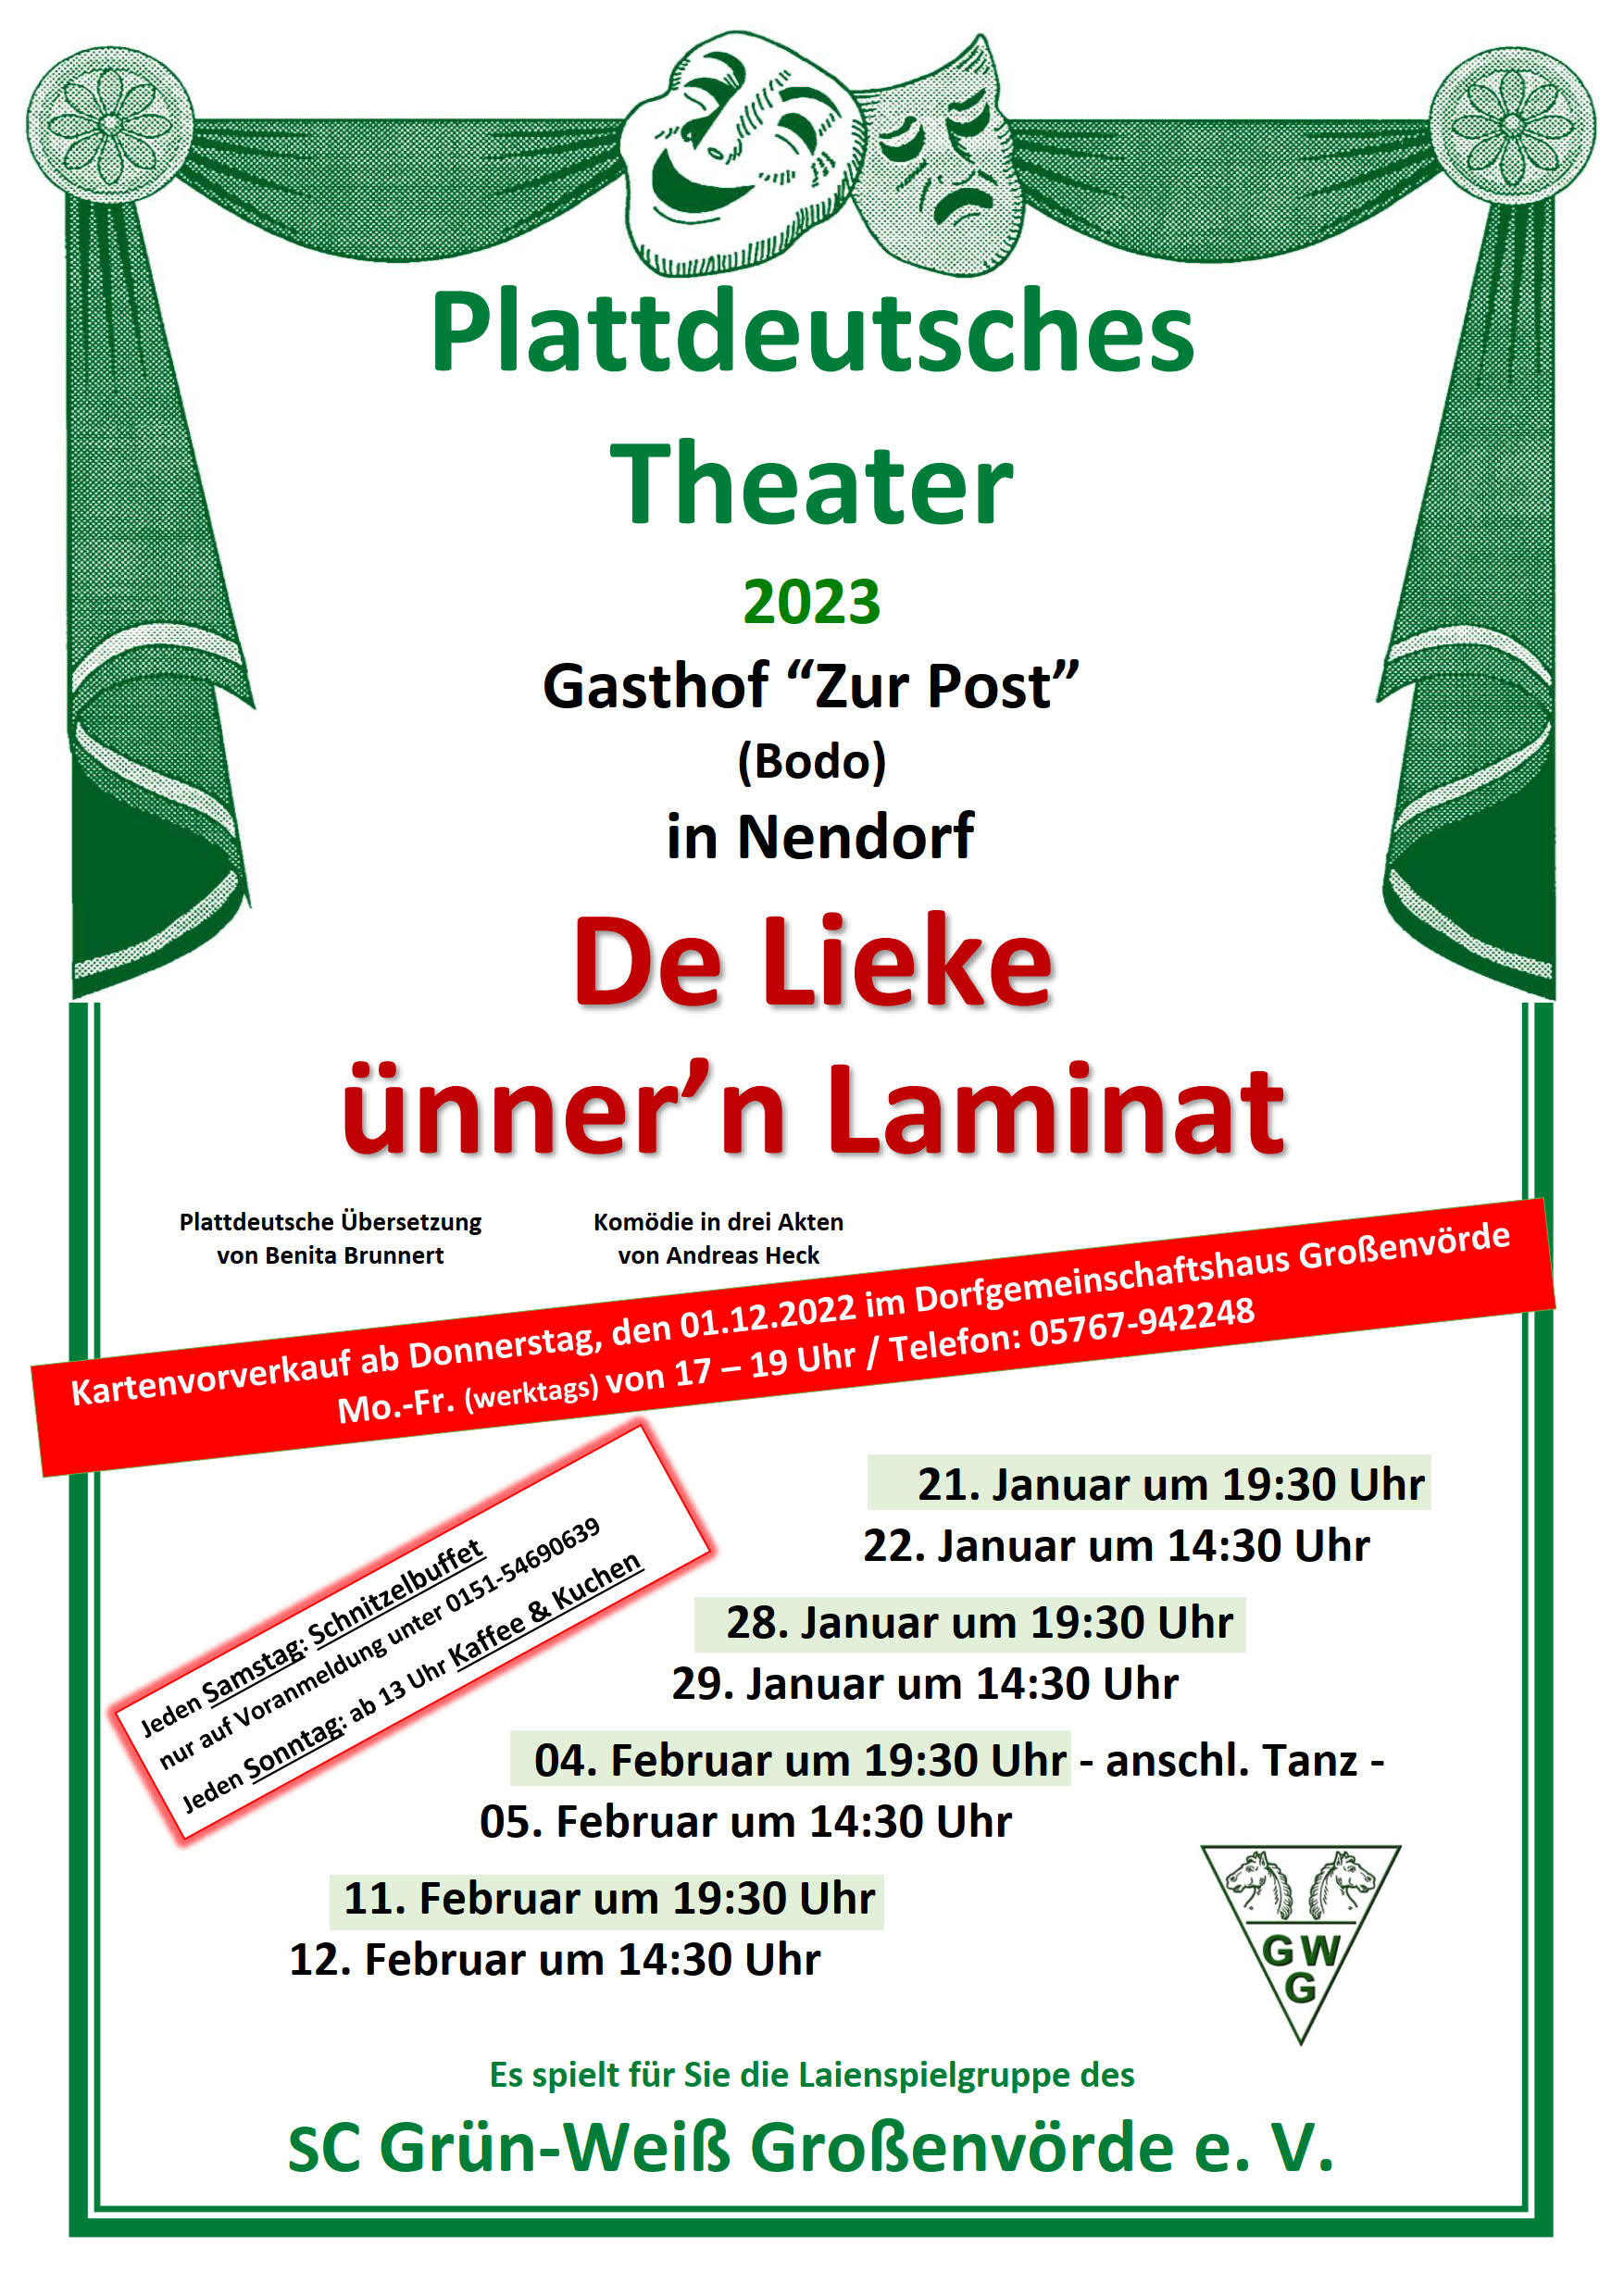 Plakat zu "De Lieke uenner'n Laminat" des SC Gruen Weiss Grossenfoerde